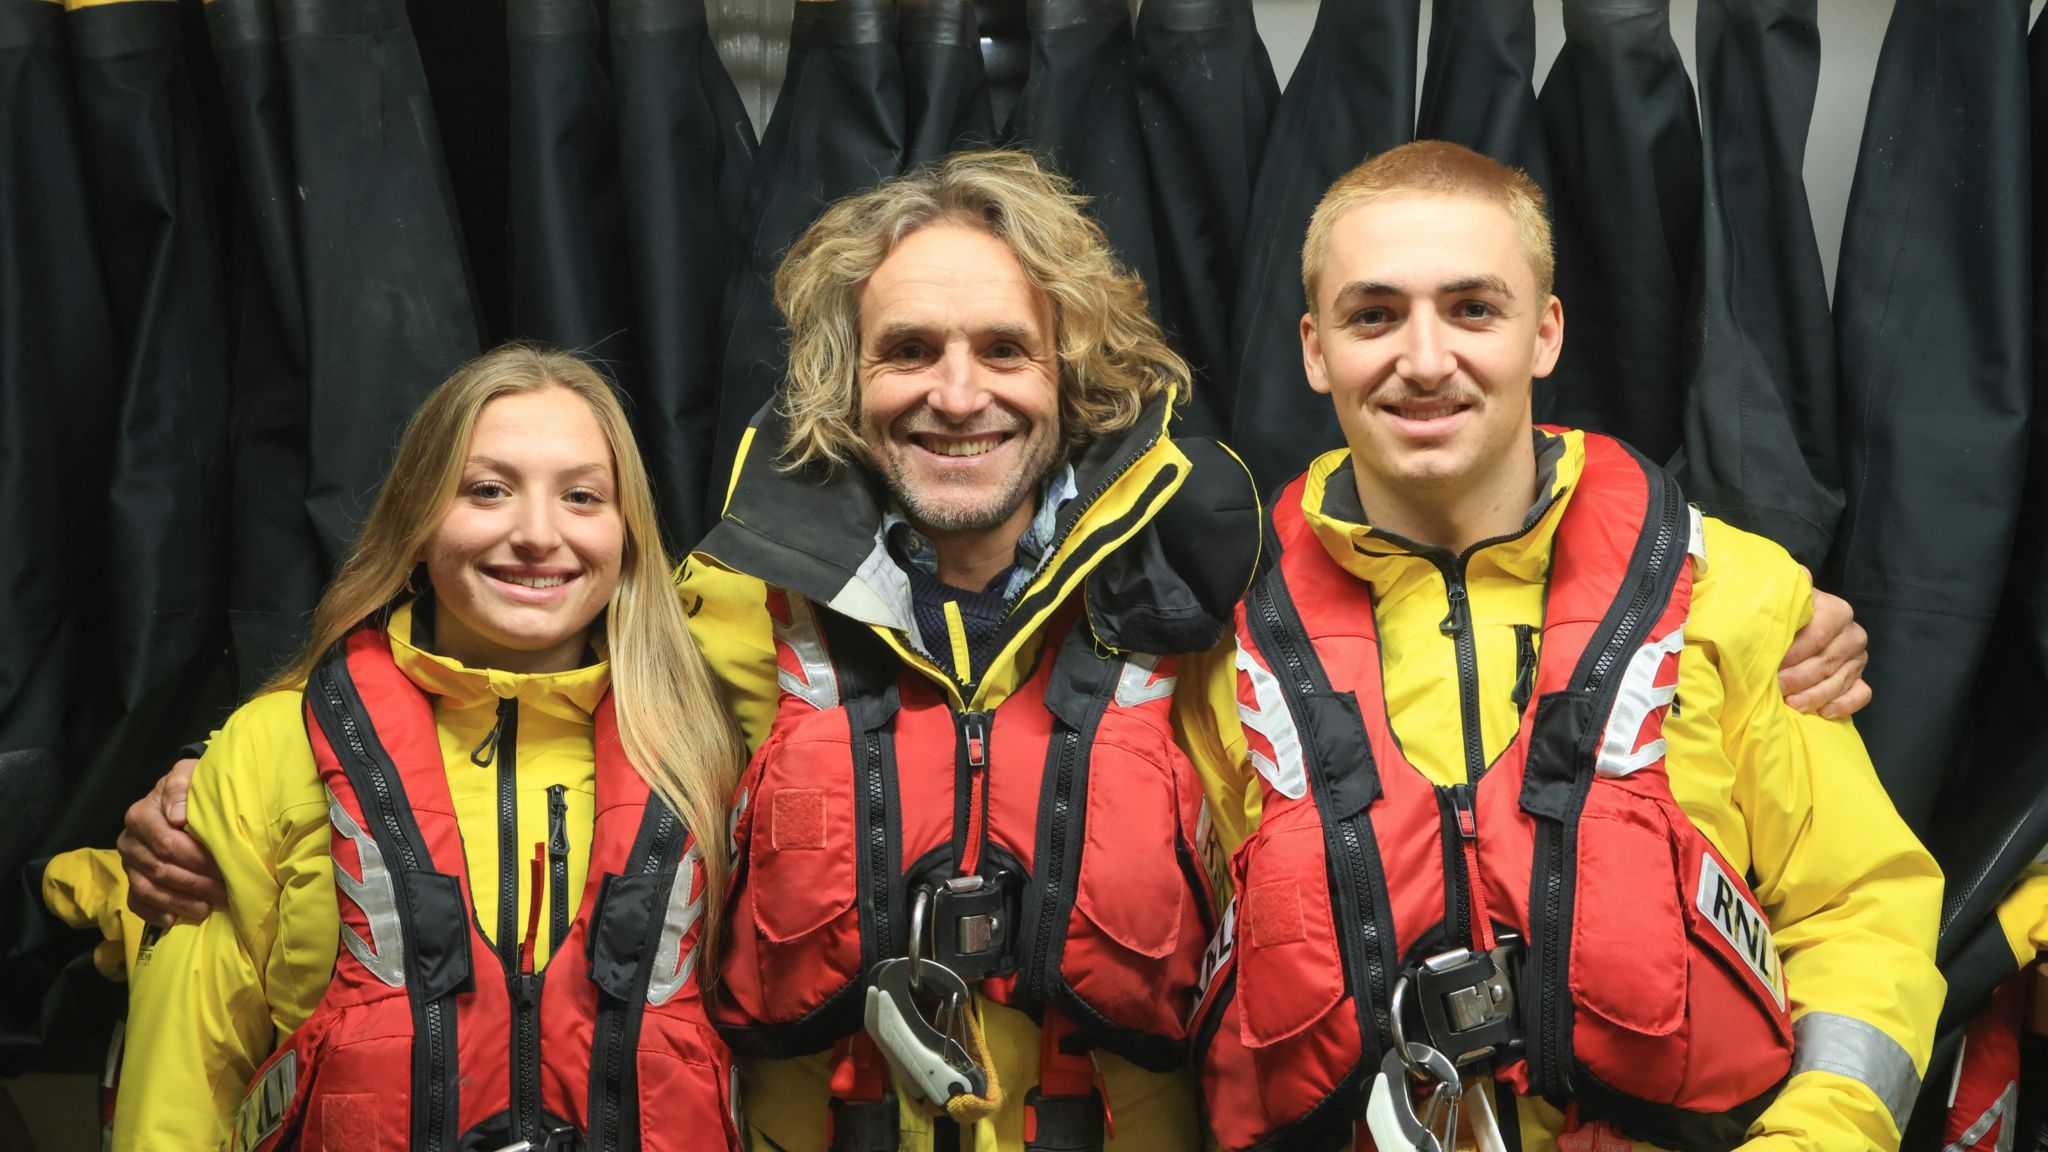 Tamsyn Gorvin, Kirstan Gorvin and Tristan Gorvin in lifejackets all embracing